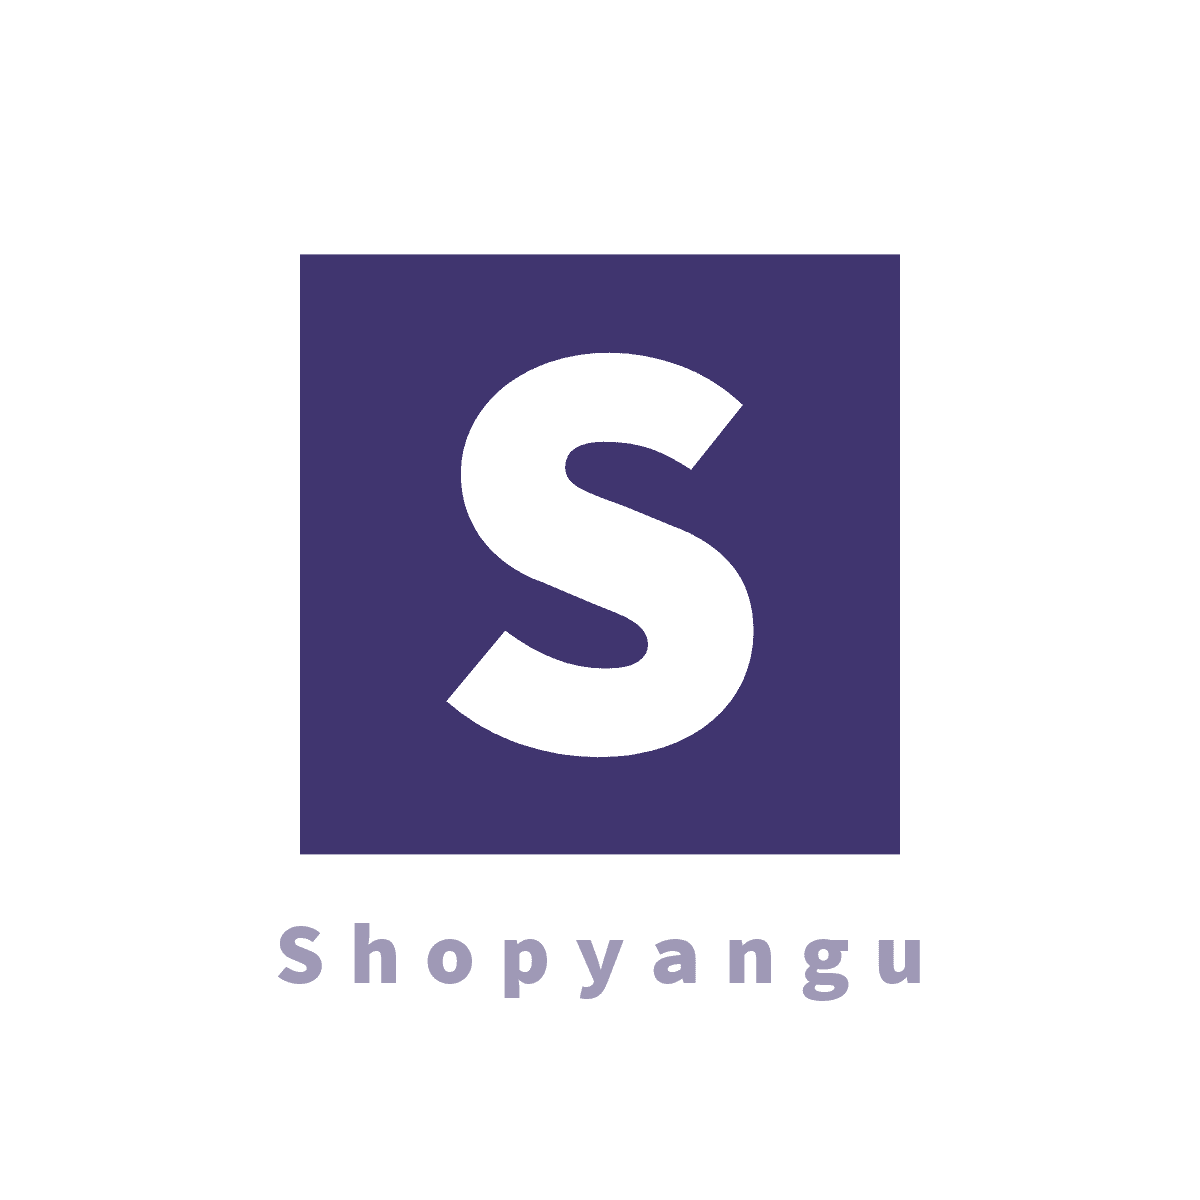 Shopyangu